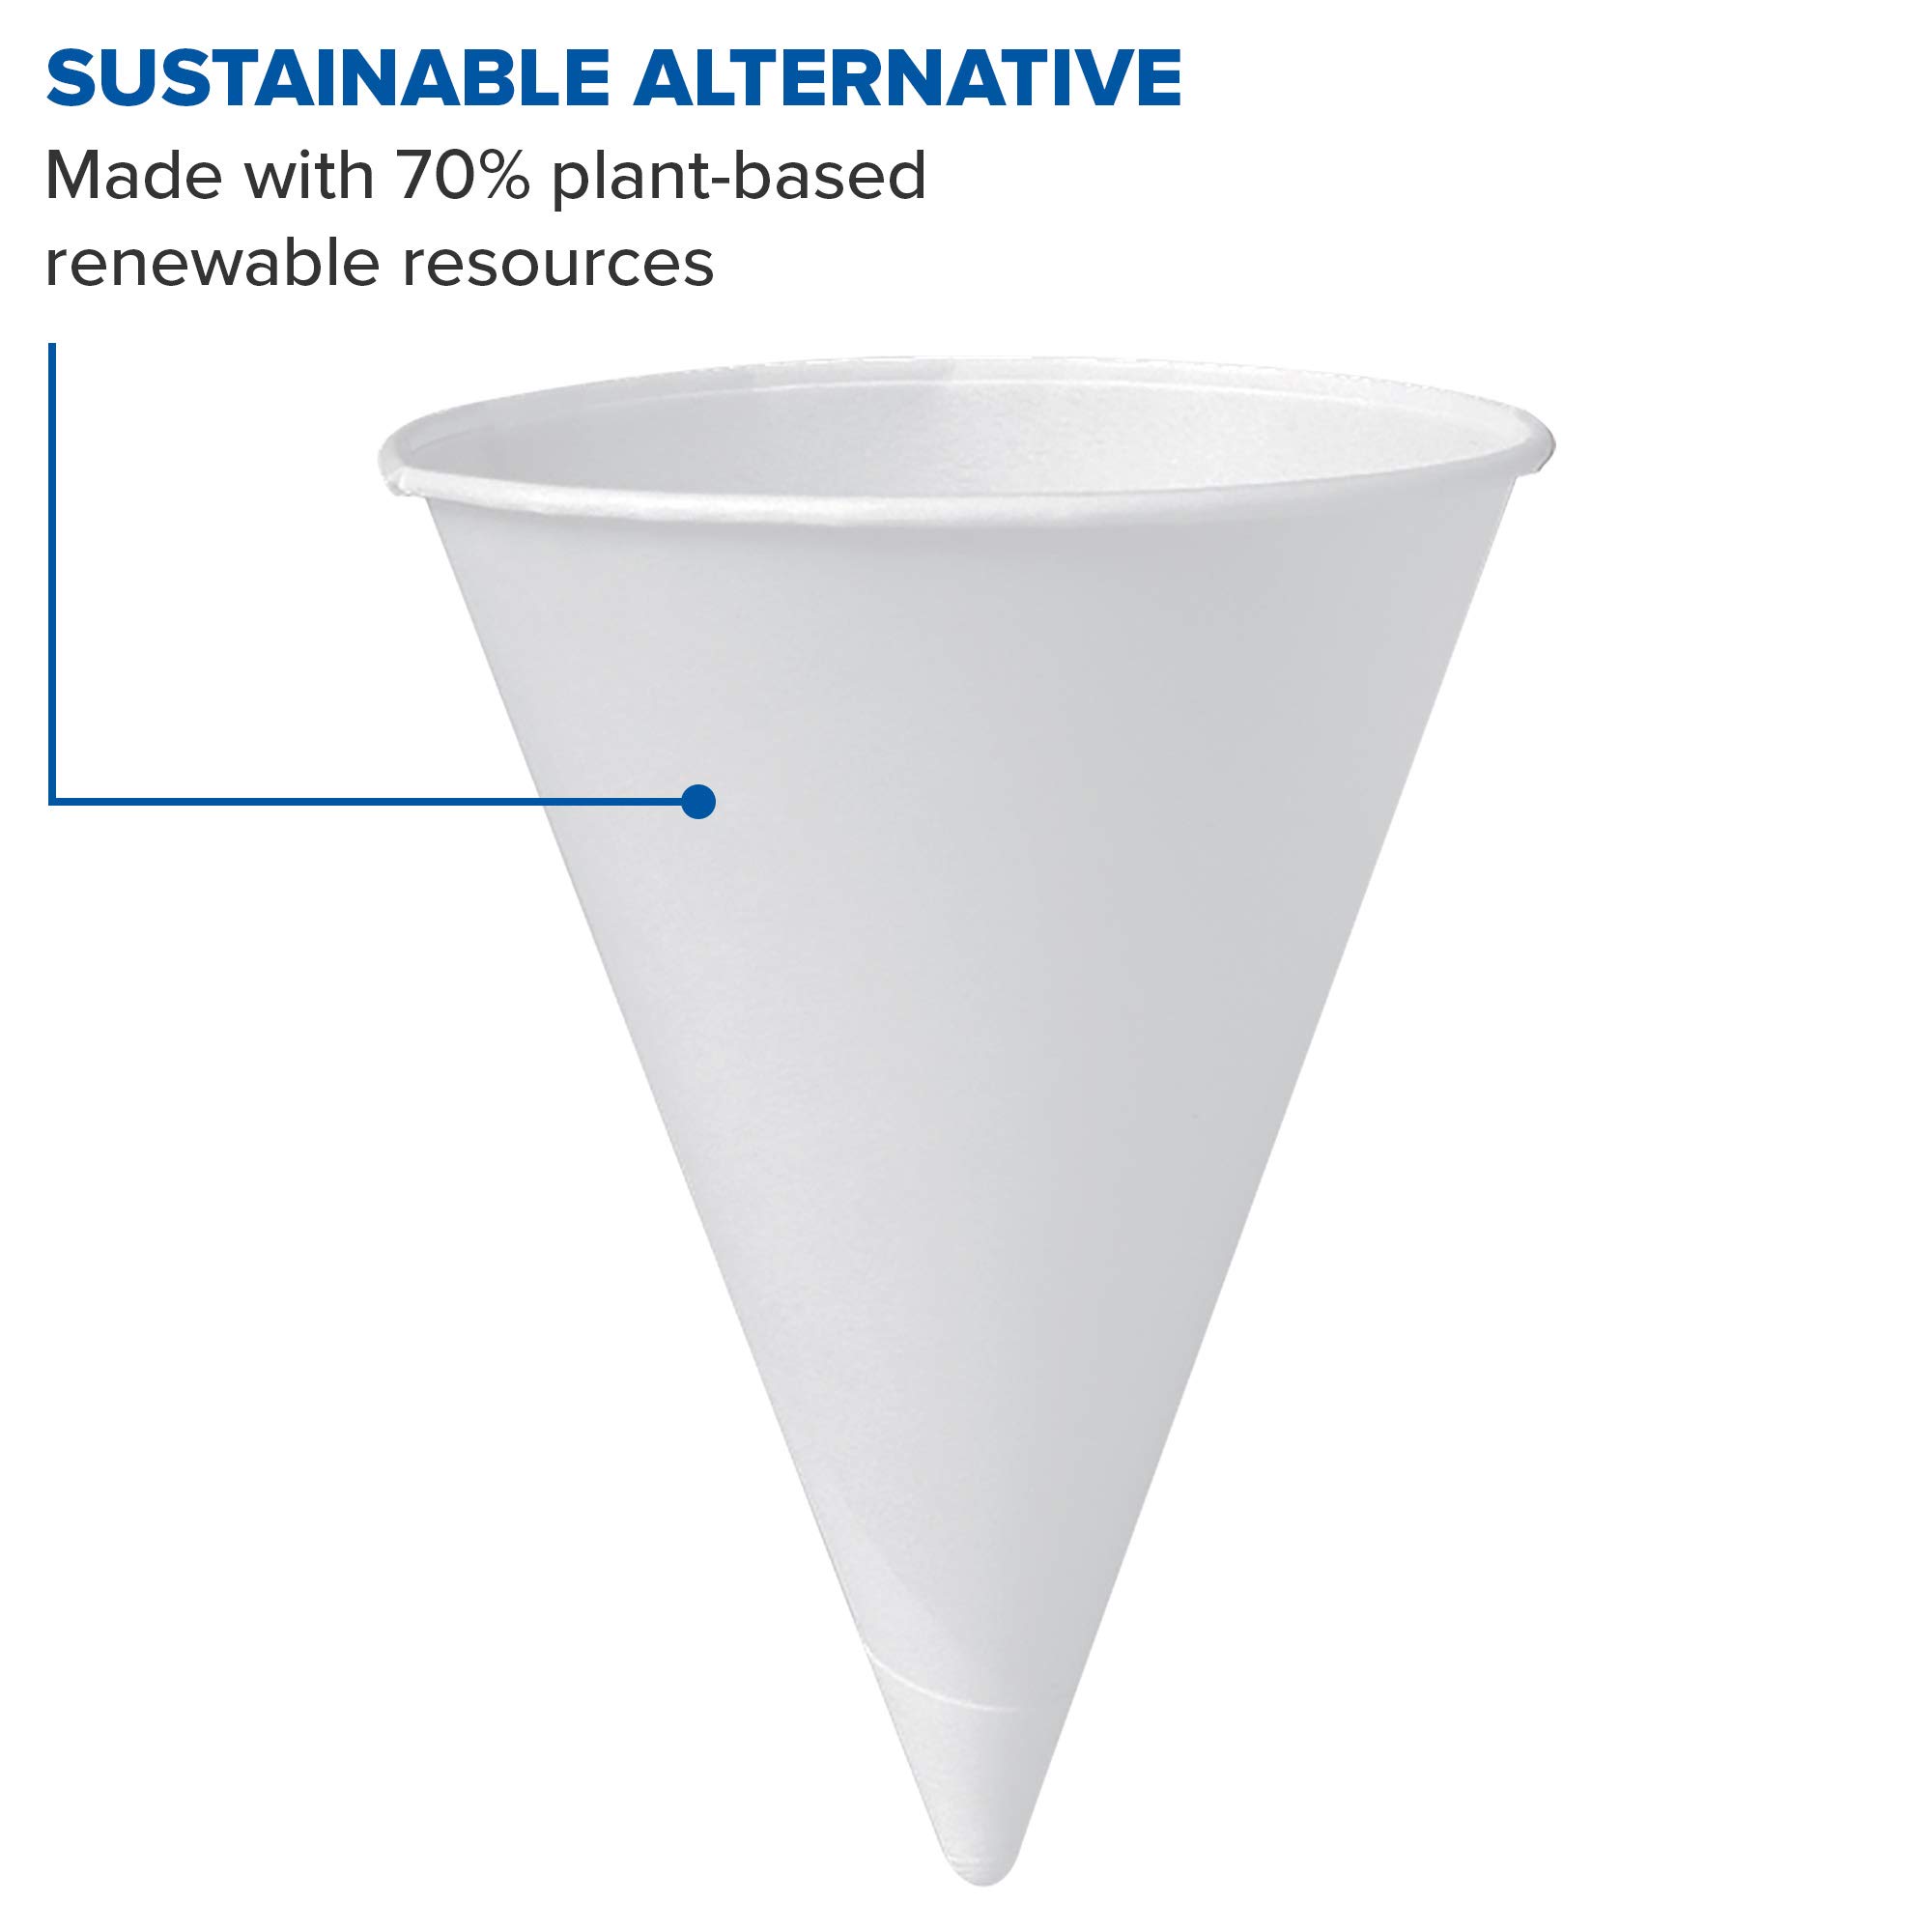 Solo 6RB-2050 6 oz White Paper Cone Cups (Case of 5000)